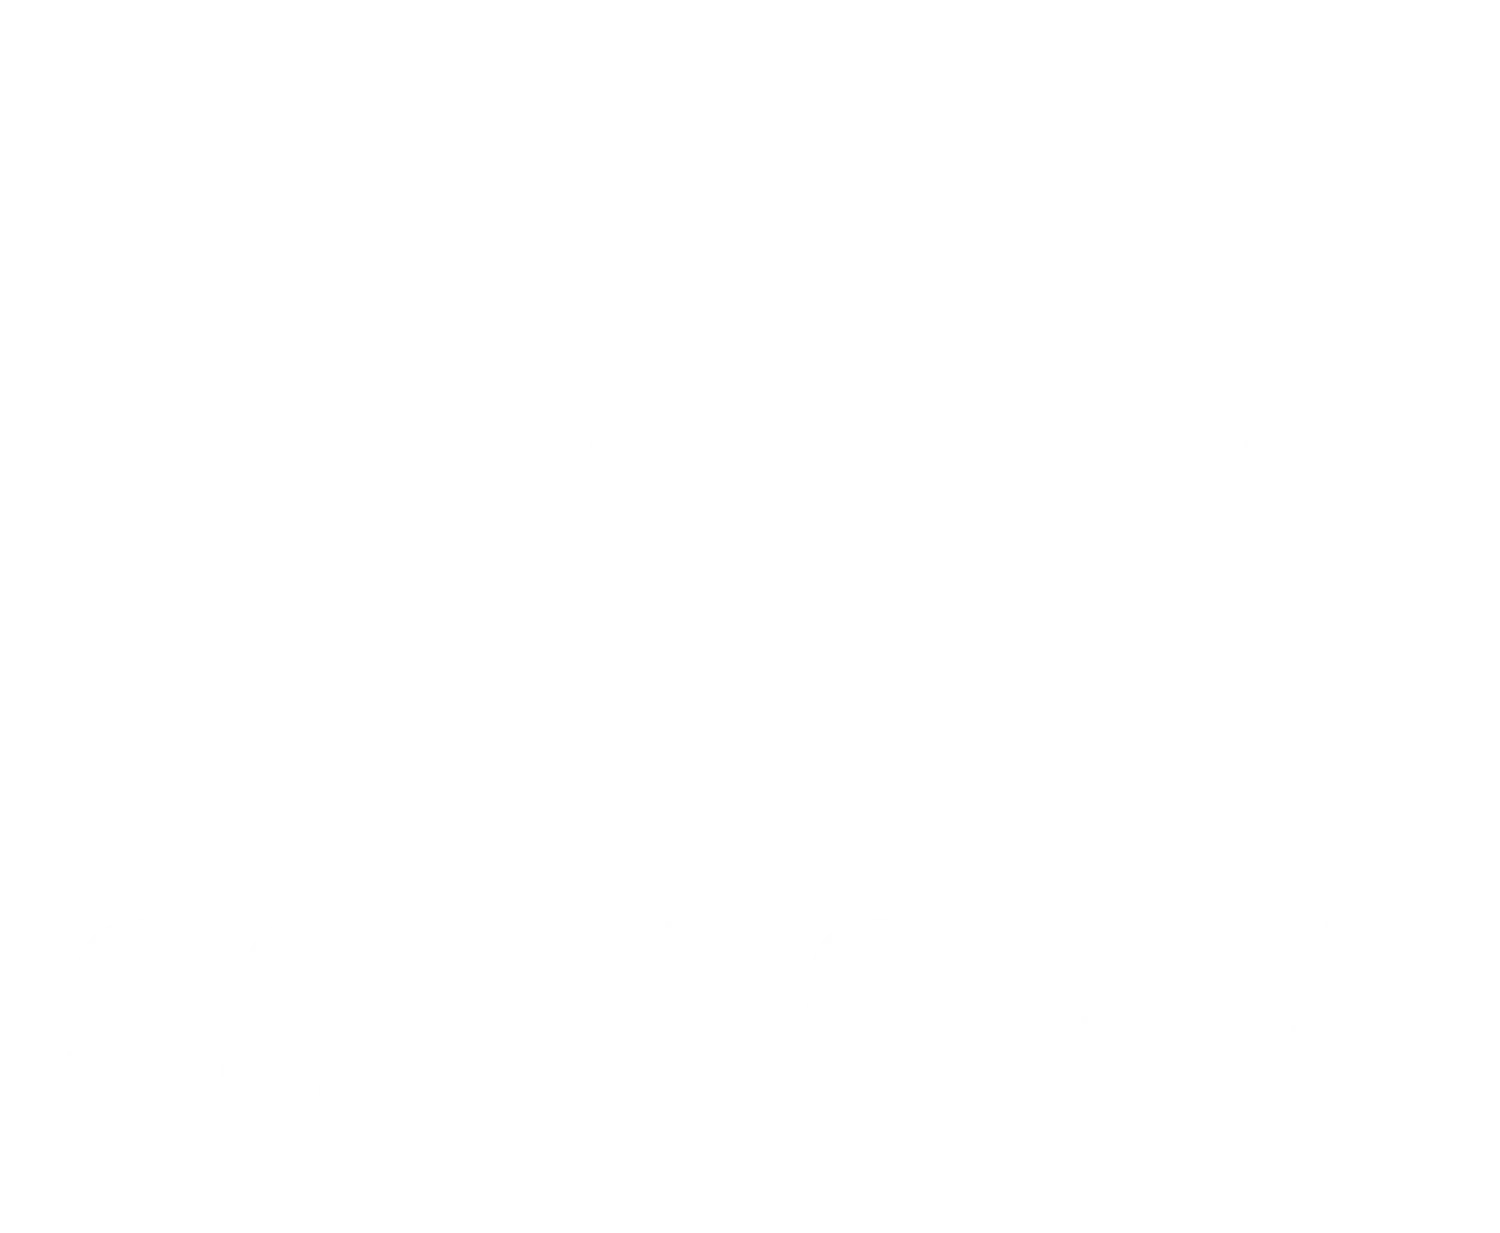 HiFi Collective Australian HiFi Distributor Logo